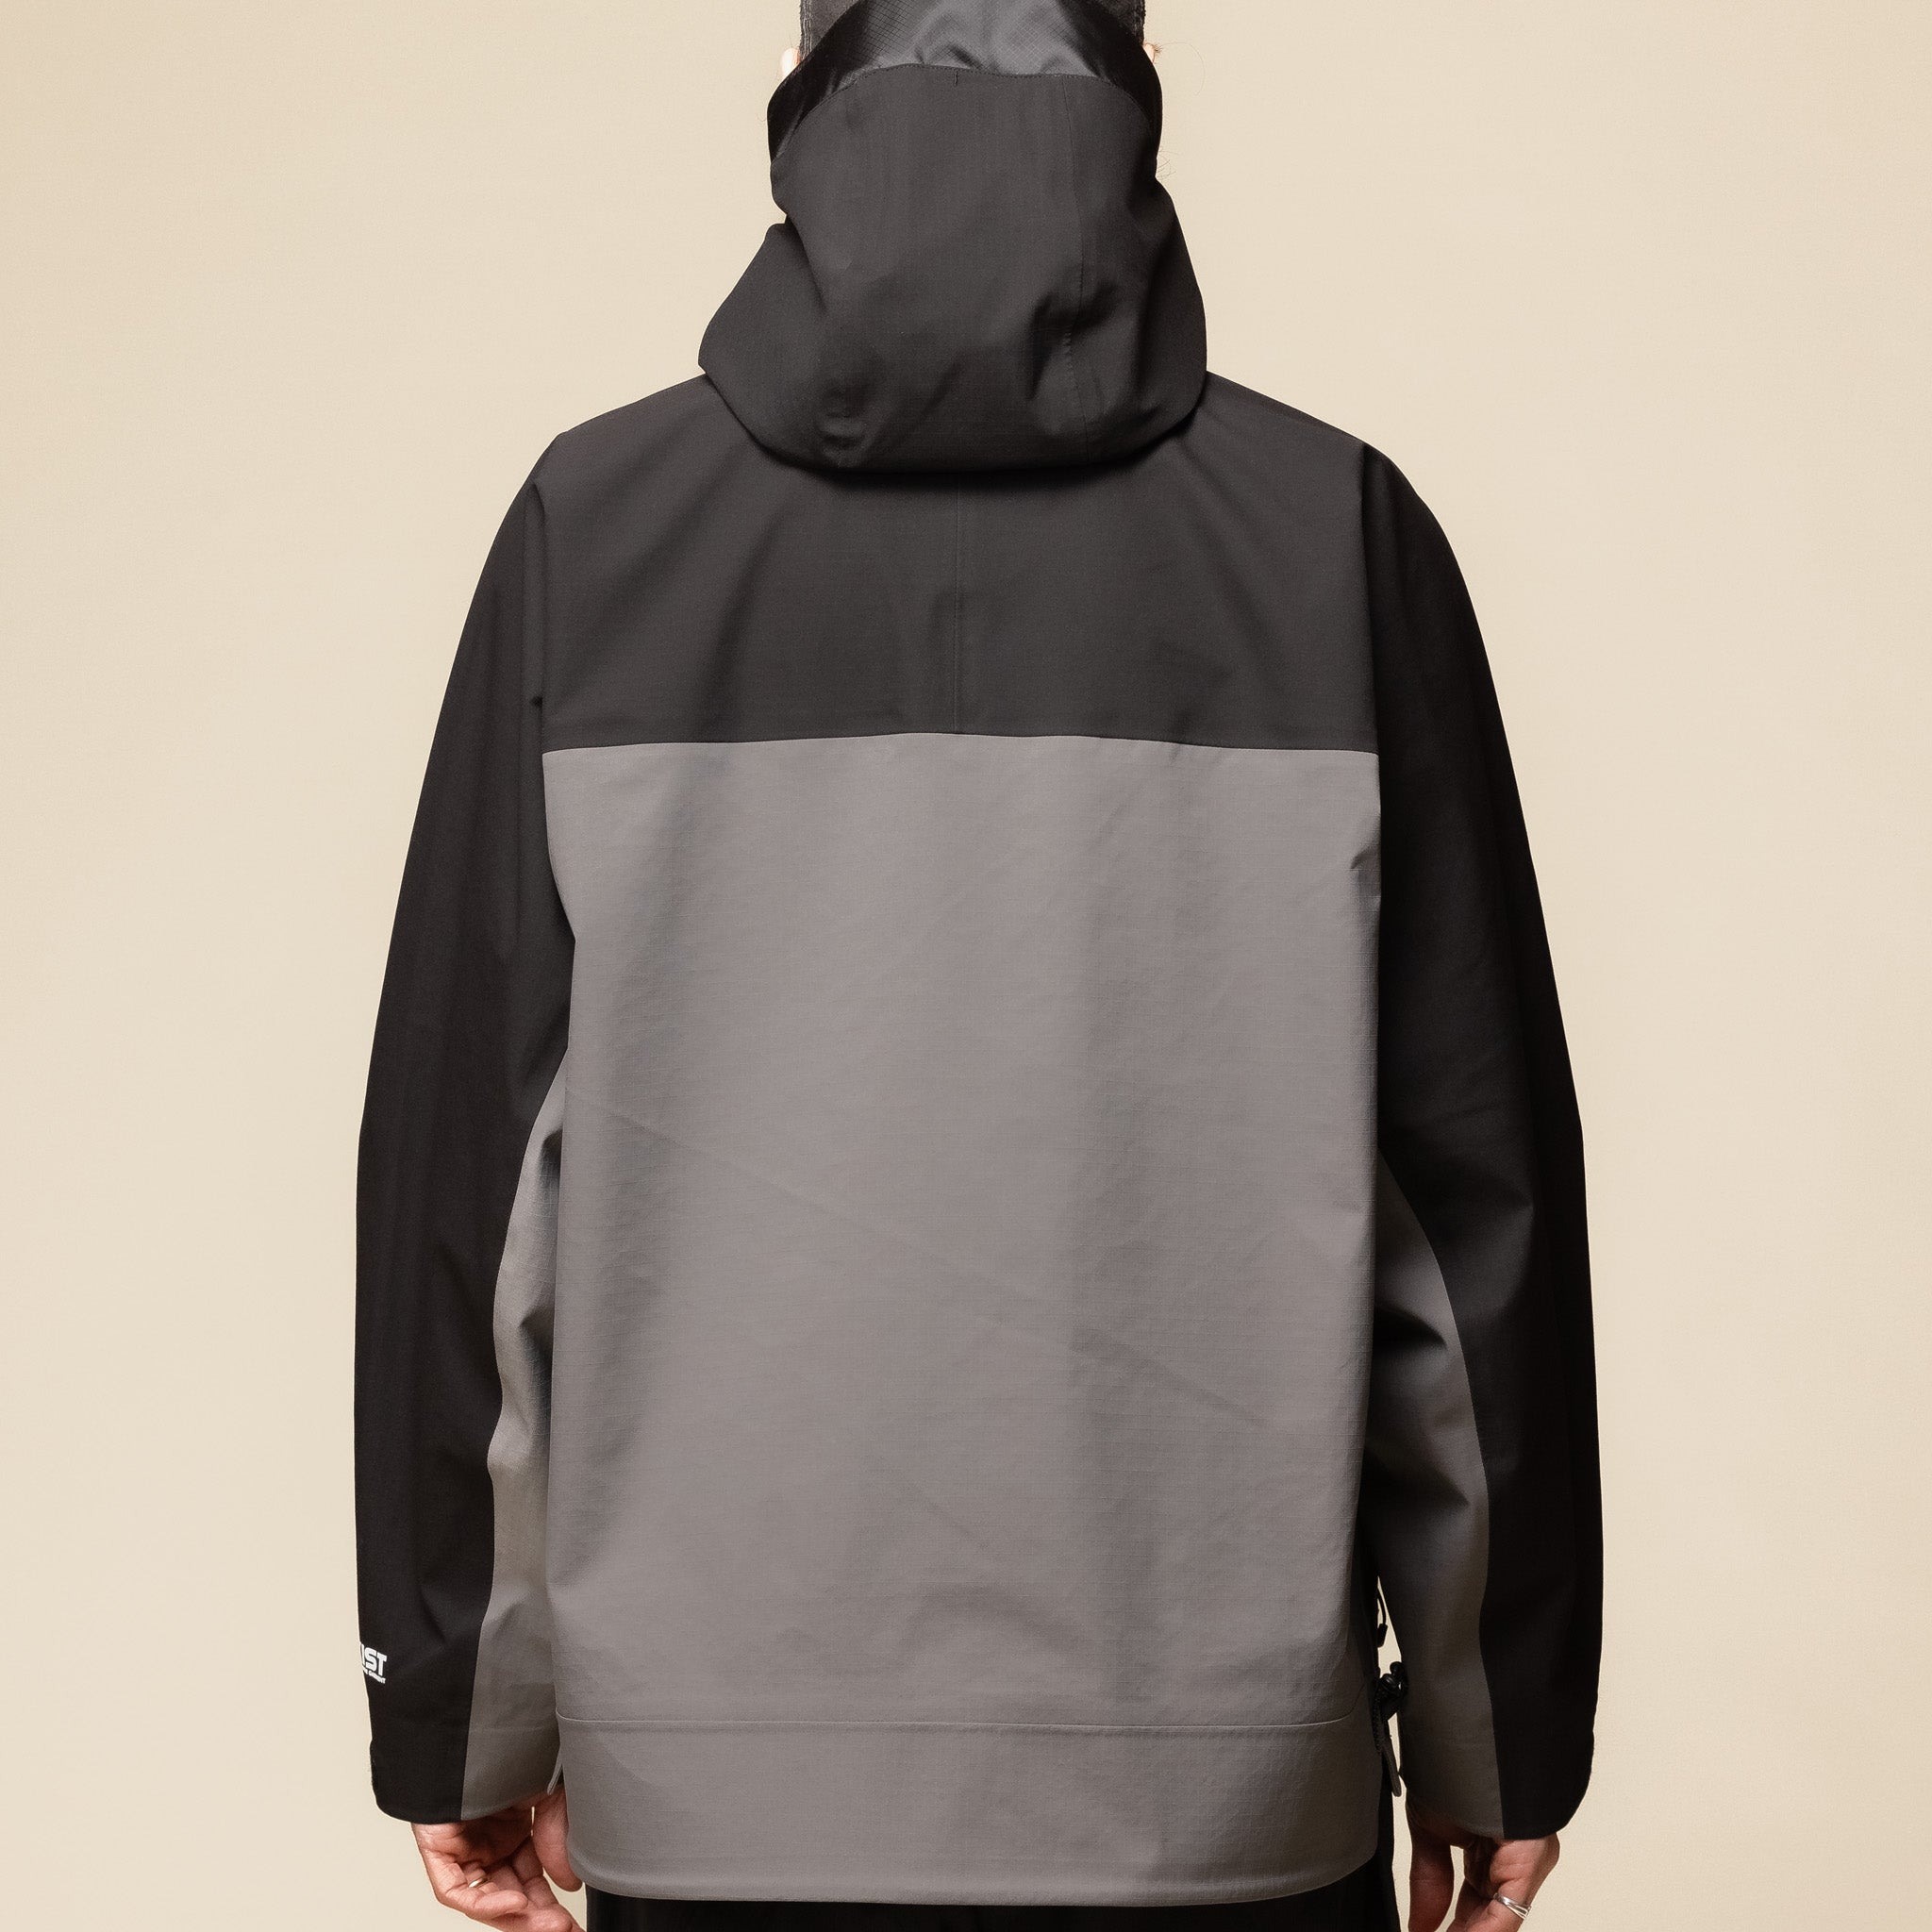 CMF Comfy Outdoor Garment - Slash Shell Coexist Jacket - Charcoal